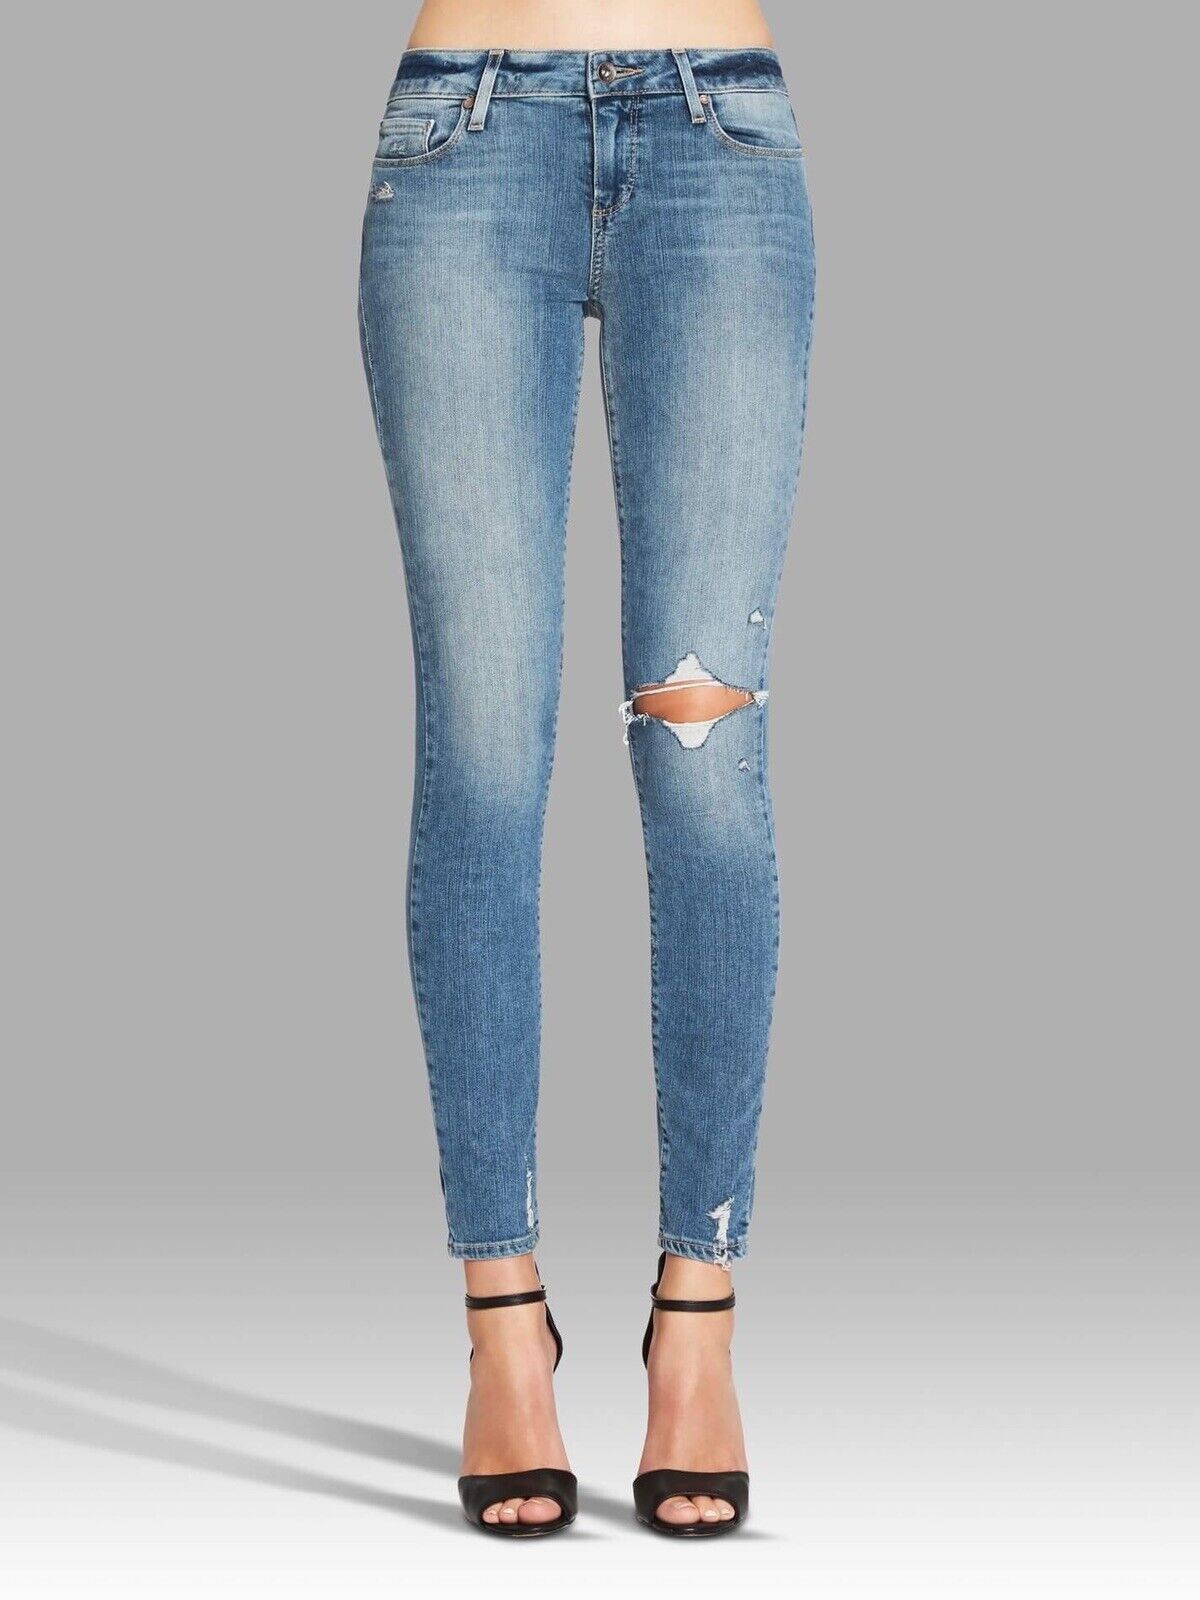 Paige Denim Women's Verdugo Ultra Skinny Jeans Size 29 Blue Distressed |  eBay